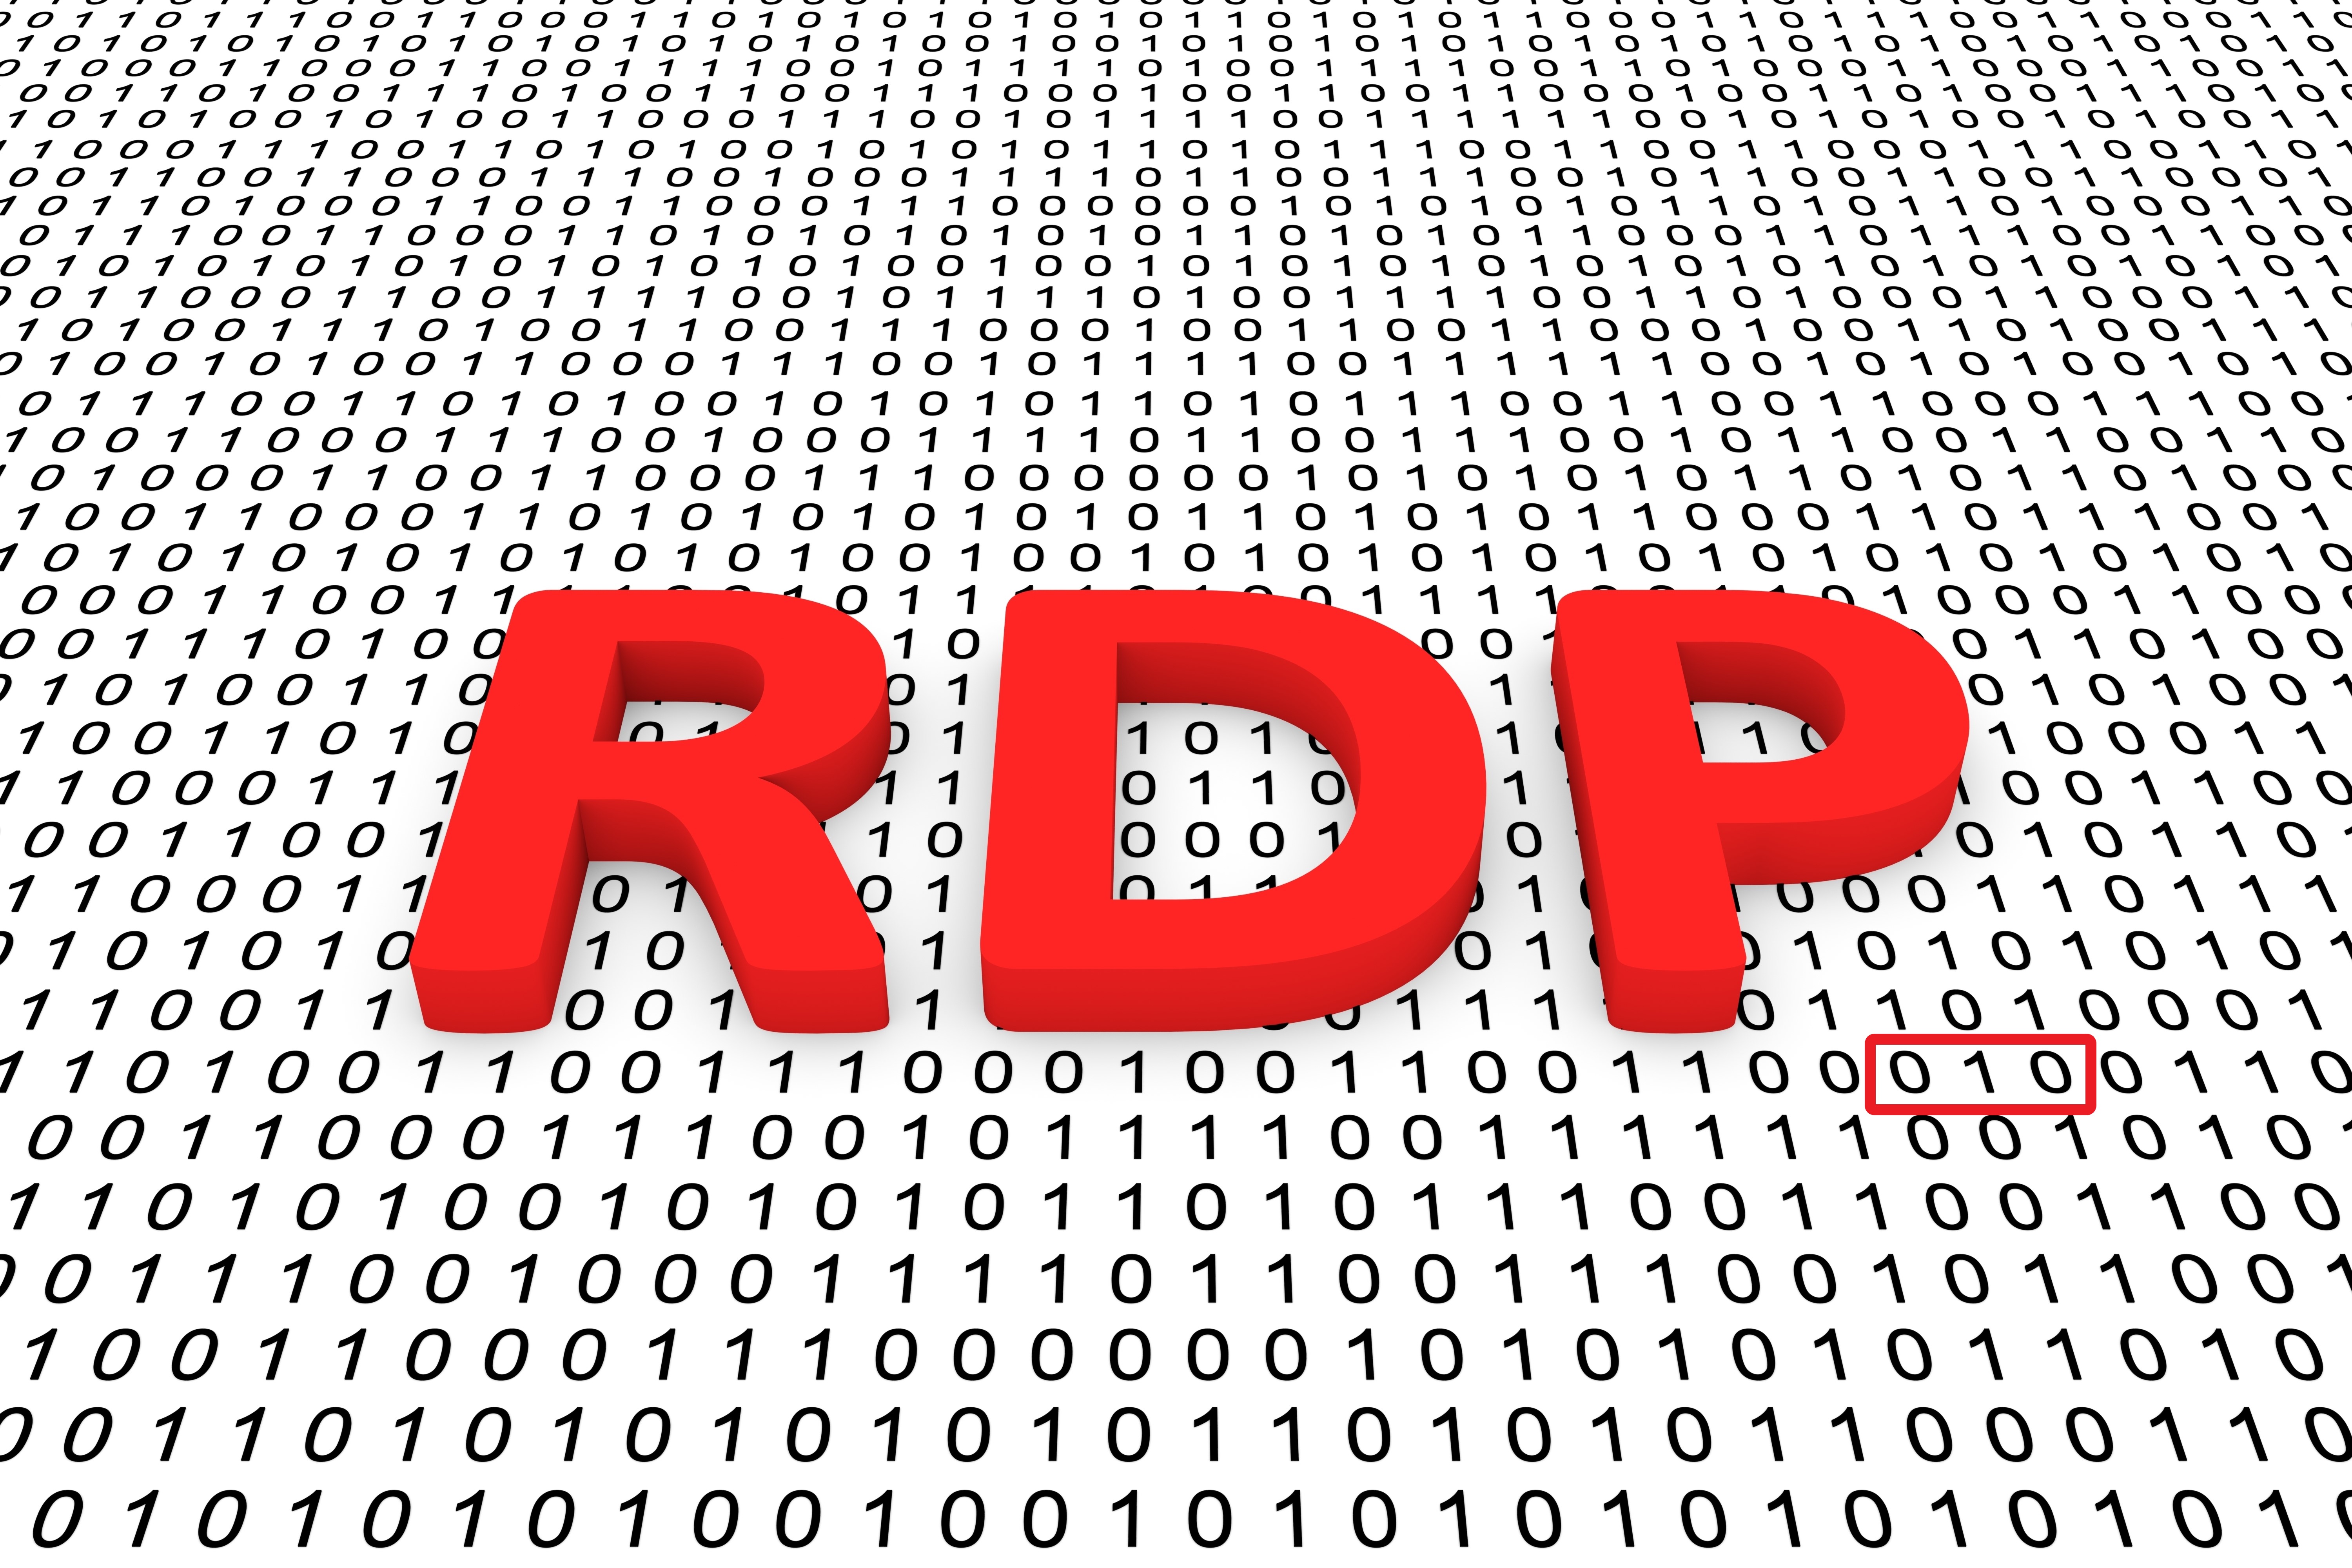 Remote Desktop Protocol: Exposed RDP (is dangerous)